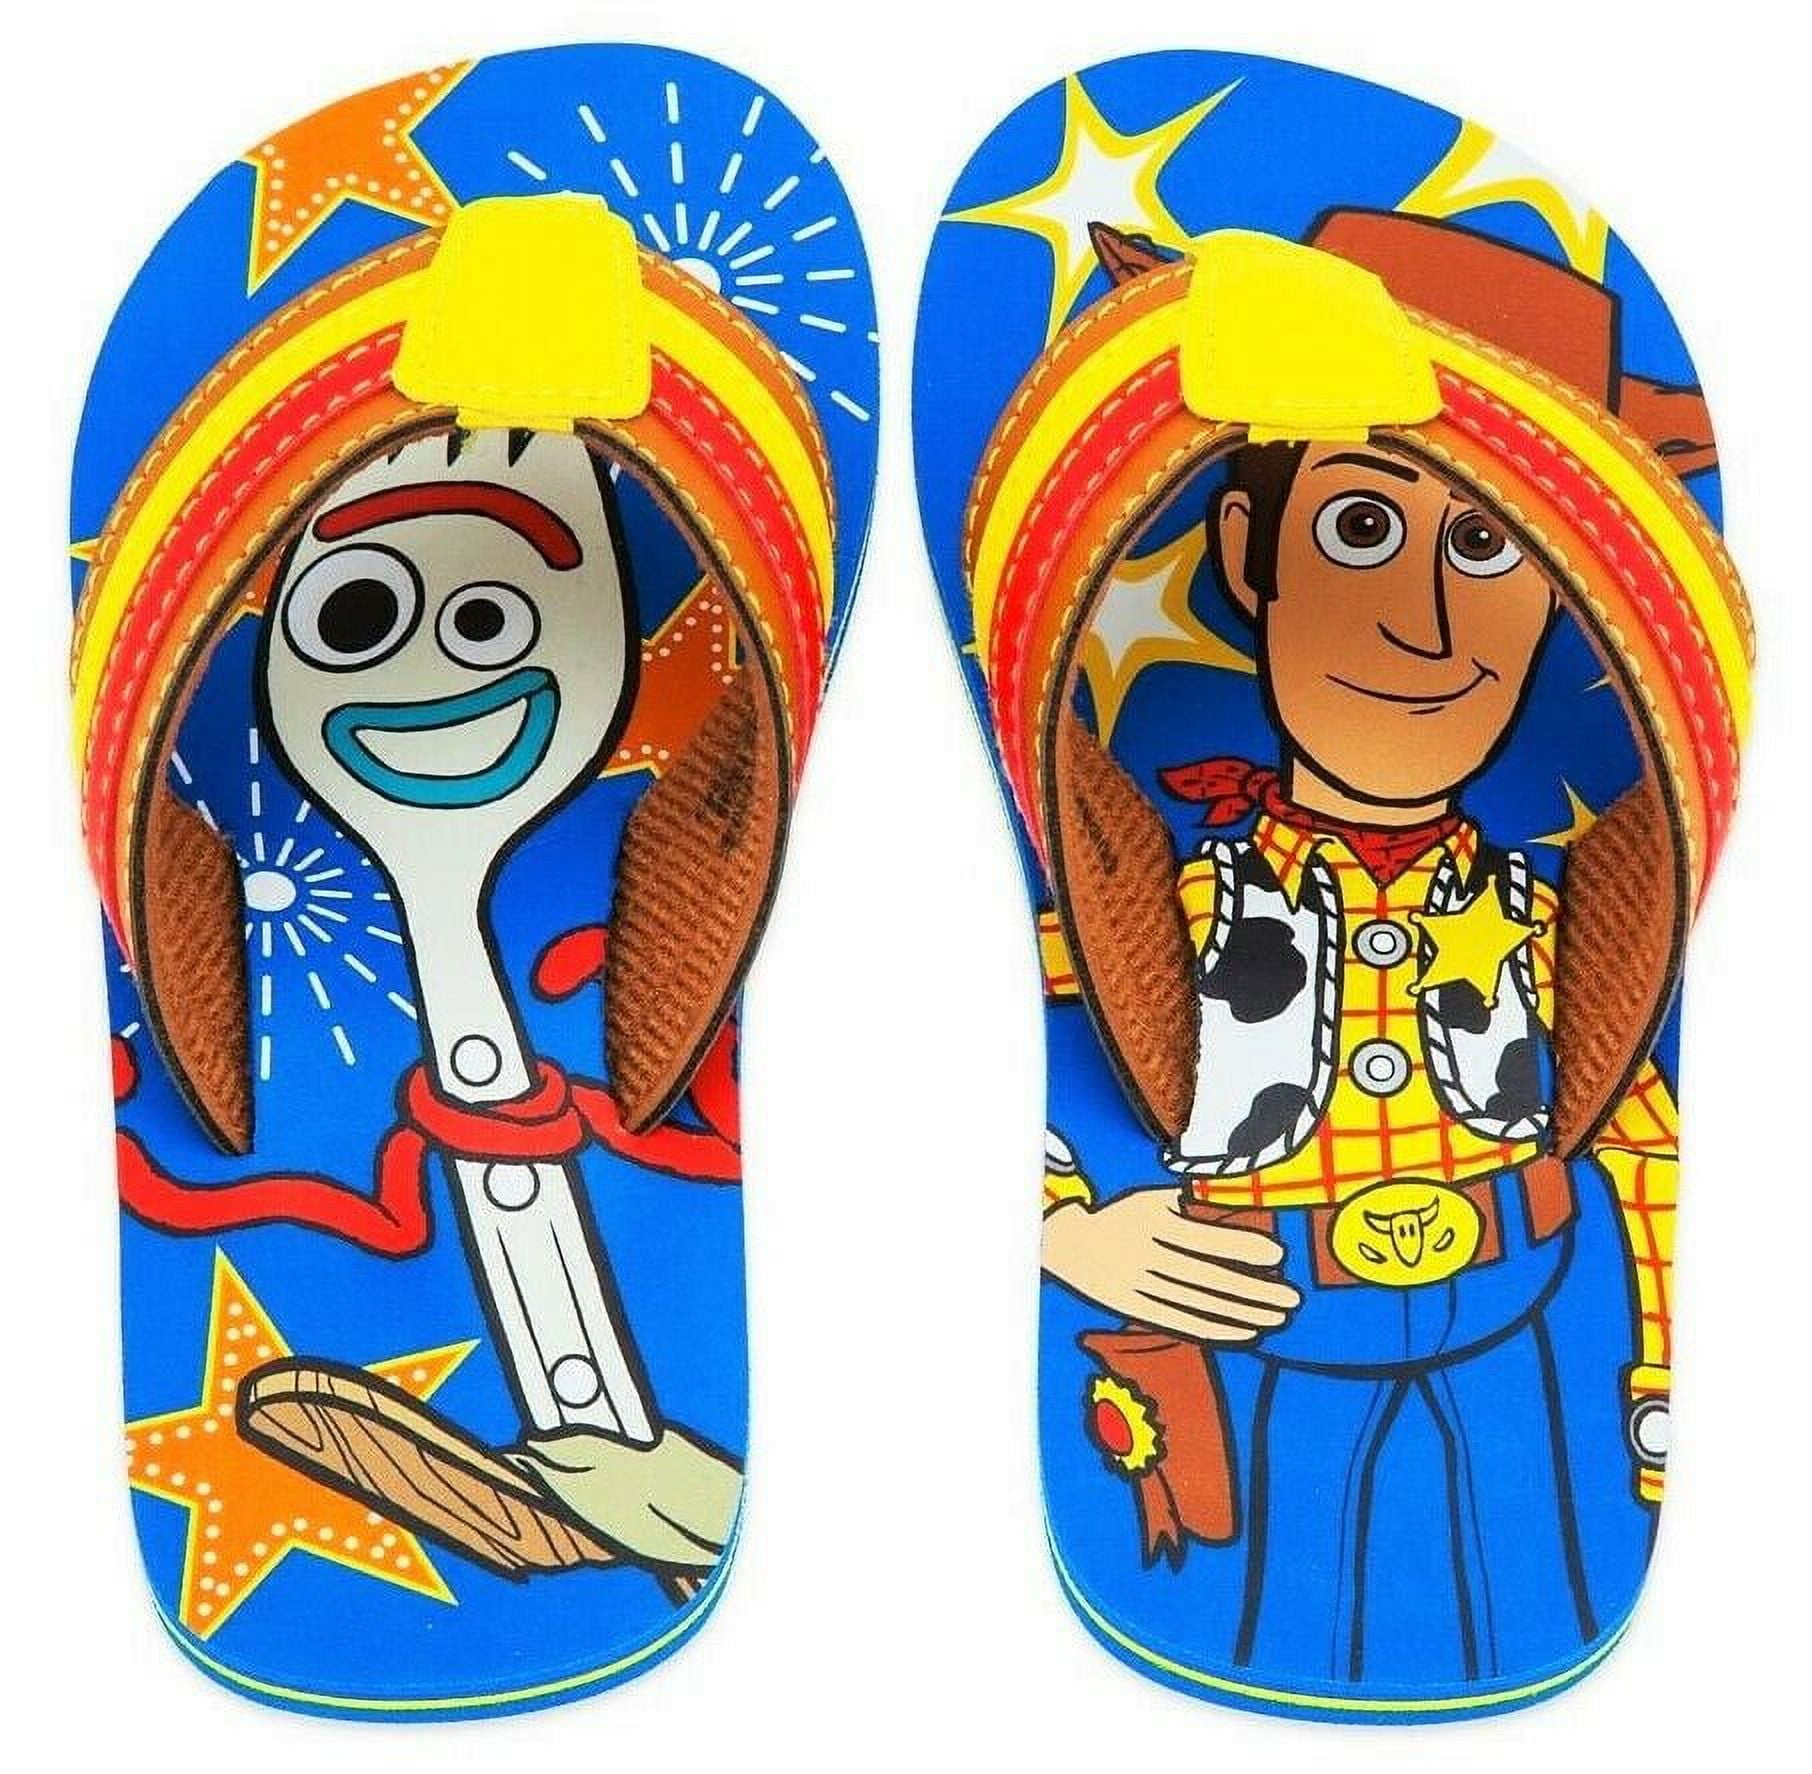 Disney Store Toy Story Woody Forky Flip Flops Sandals Shoes Boy Size 11 12 3f10df04 fa8a 4819 8aeb e18c80dd6c05.dad6a8f98f9414373e64a1f1ef8e8de7